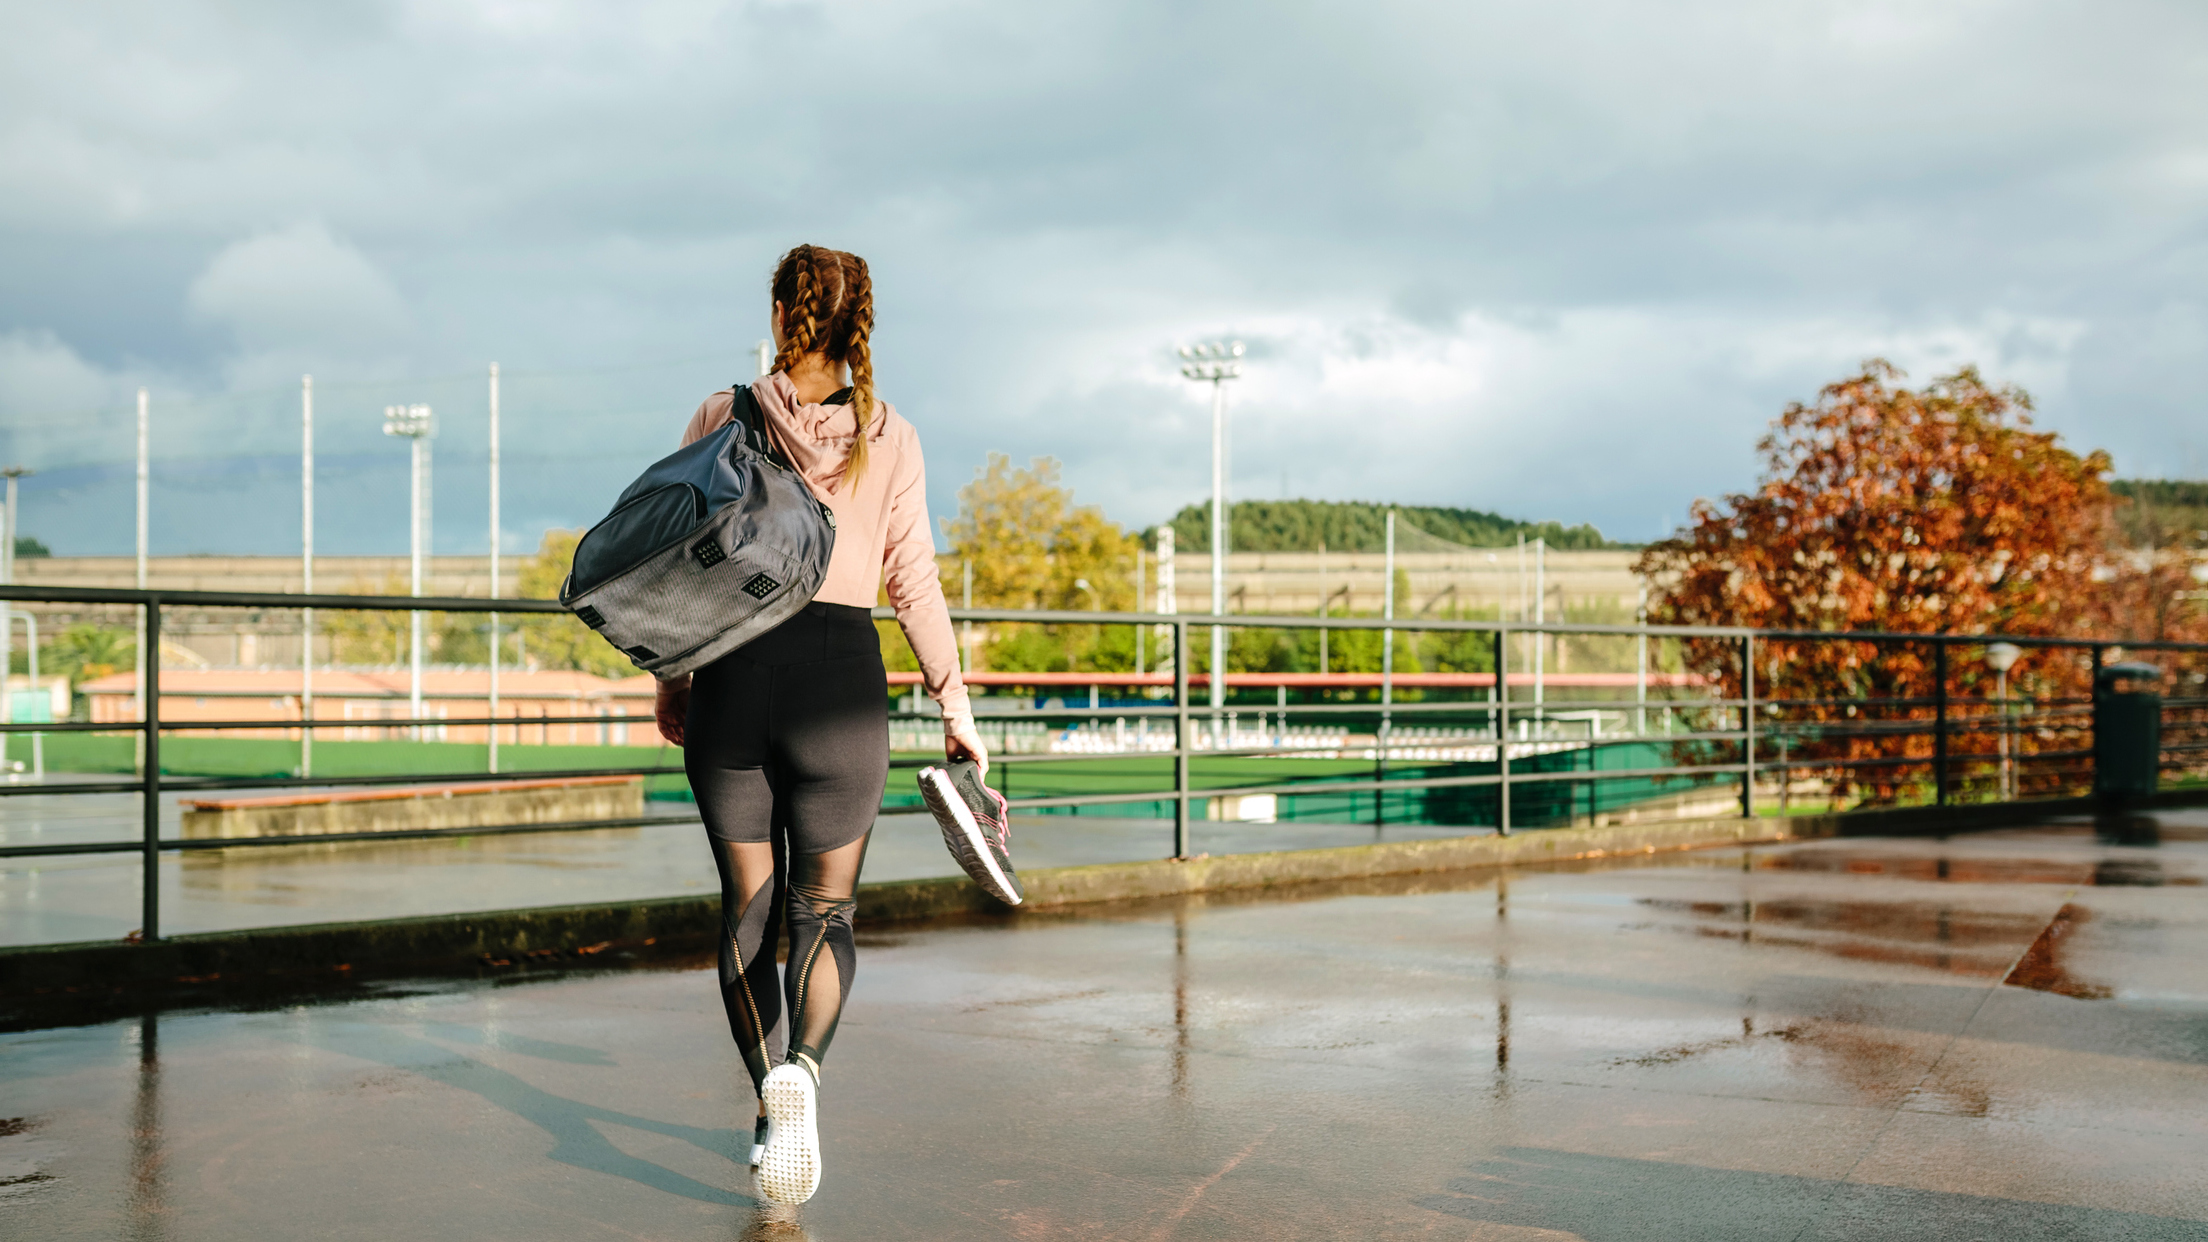 Womens Champion Training Leggings With Logo In Black – Sale Lab UK